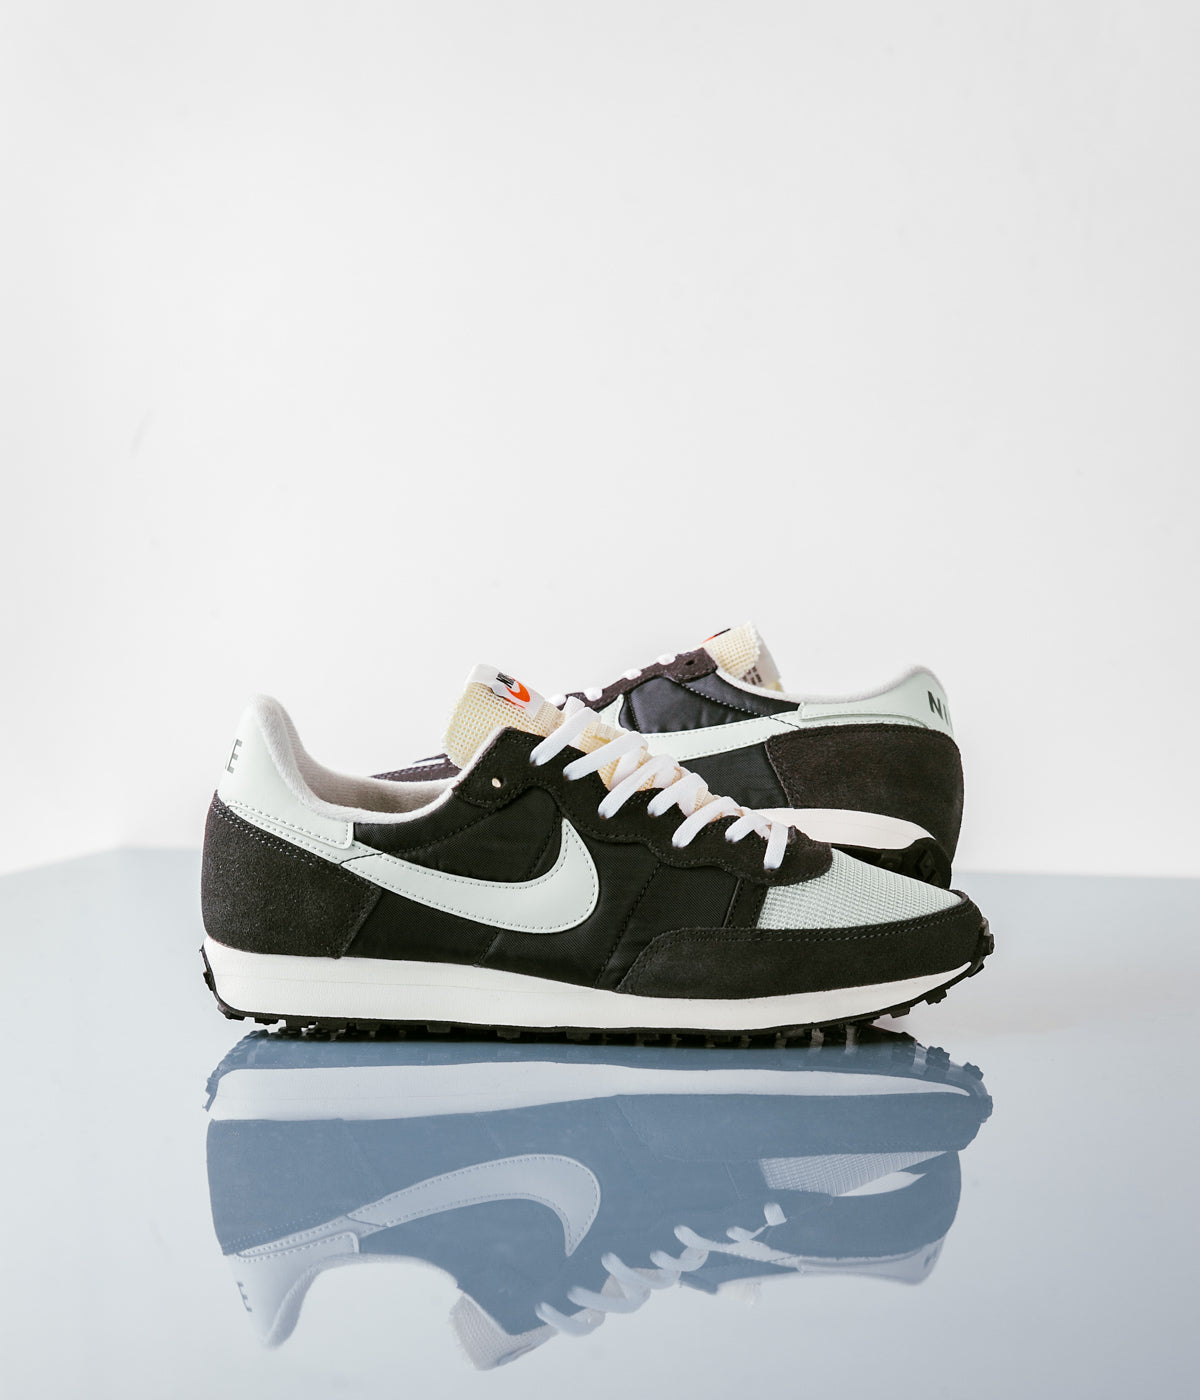 Nike OG Shoes - Off / Light Silver Dark Smoke Grey | Always in